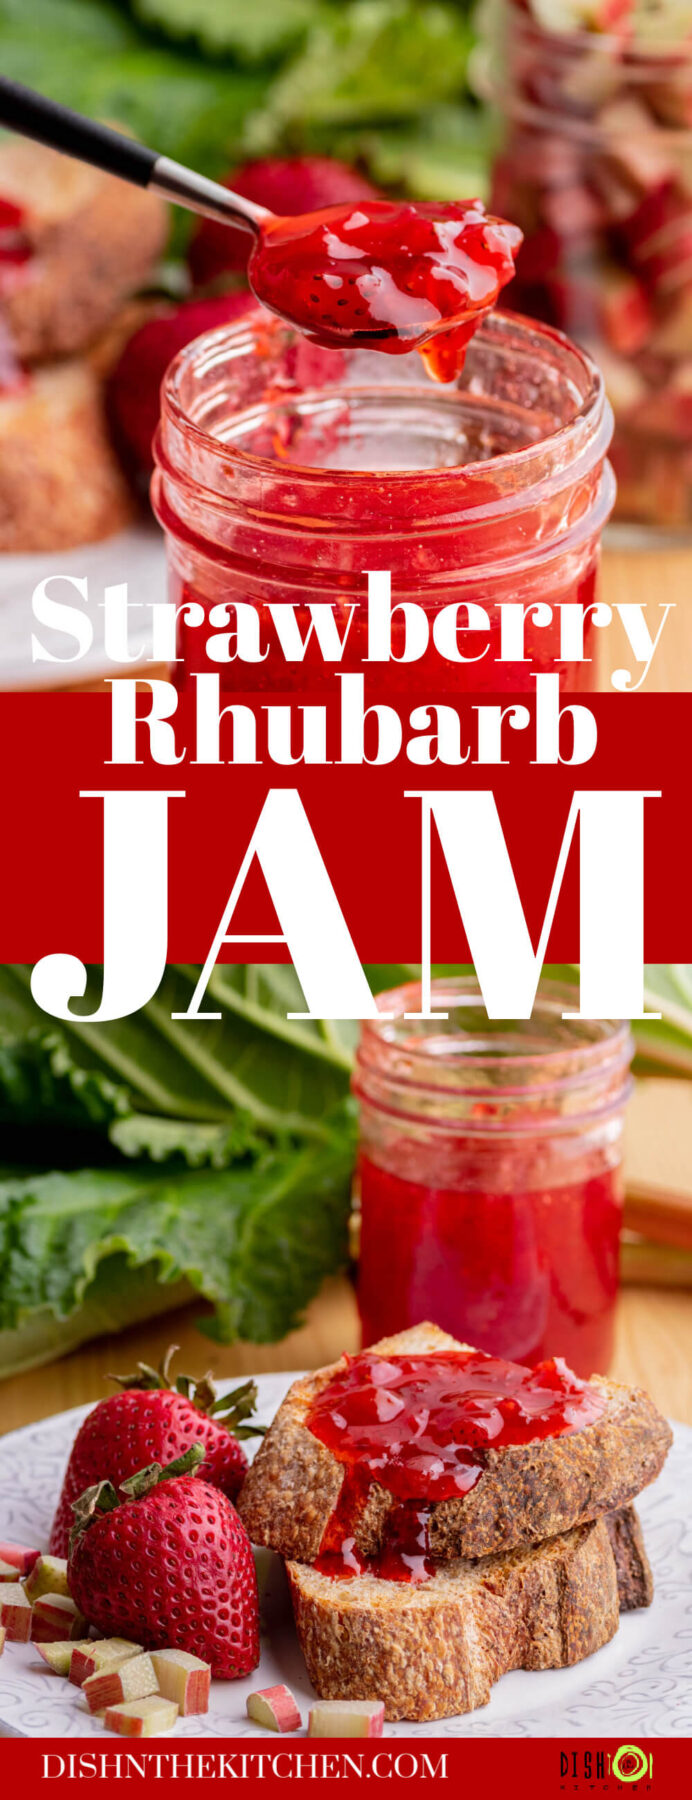 Pinterest image of Strawberry Rhubarb Jam on toast.